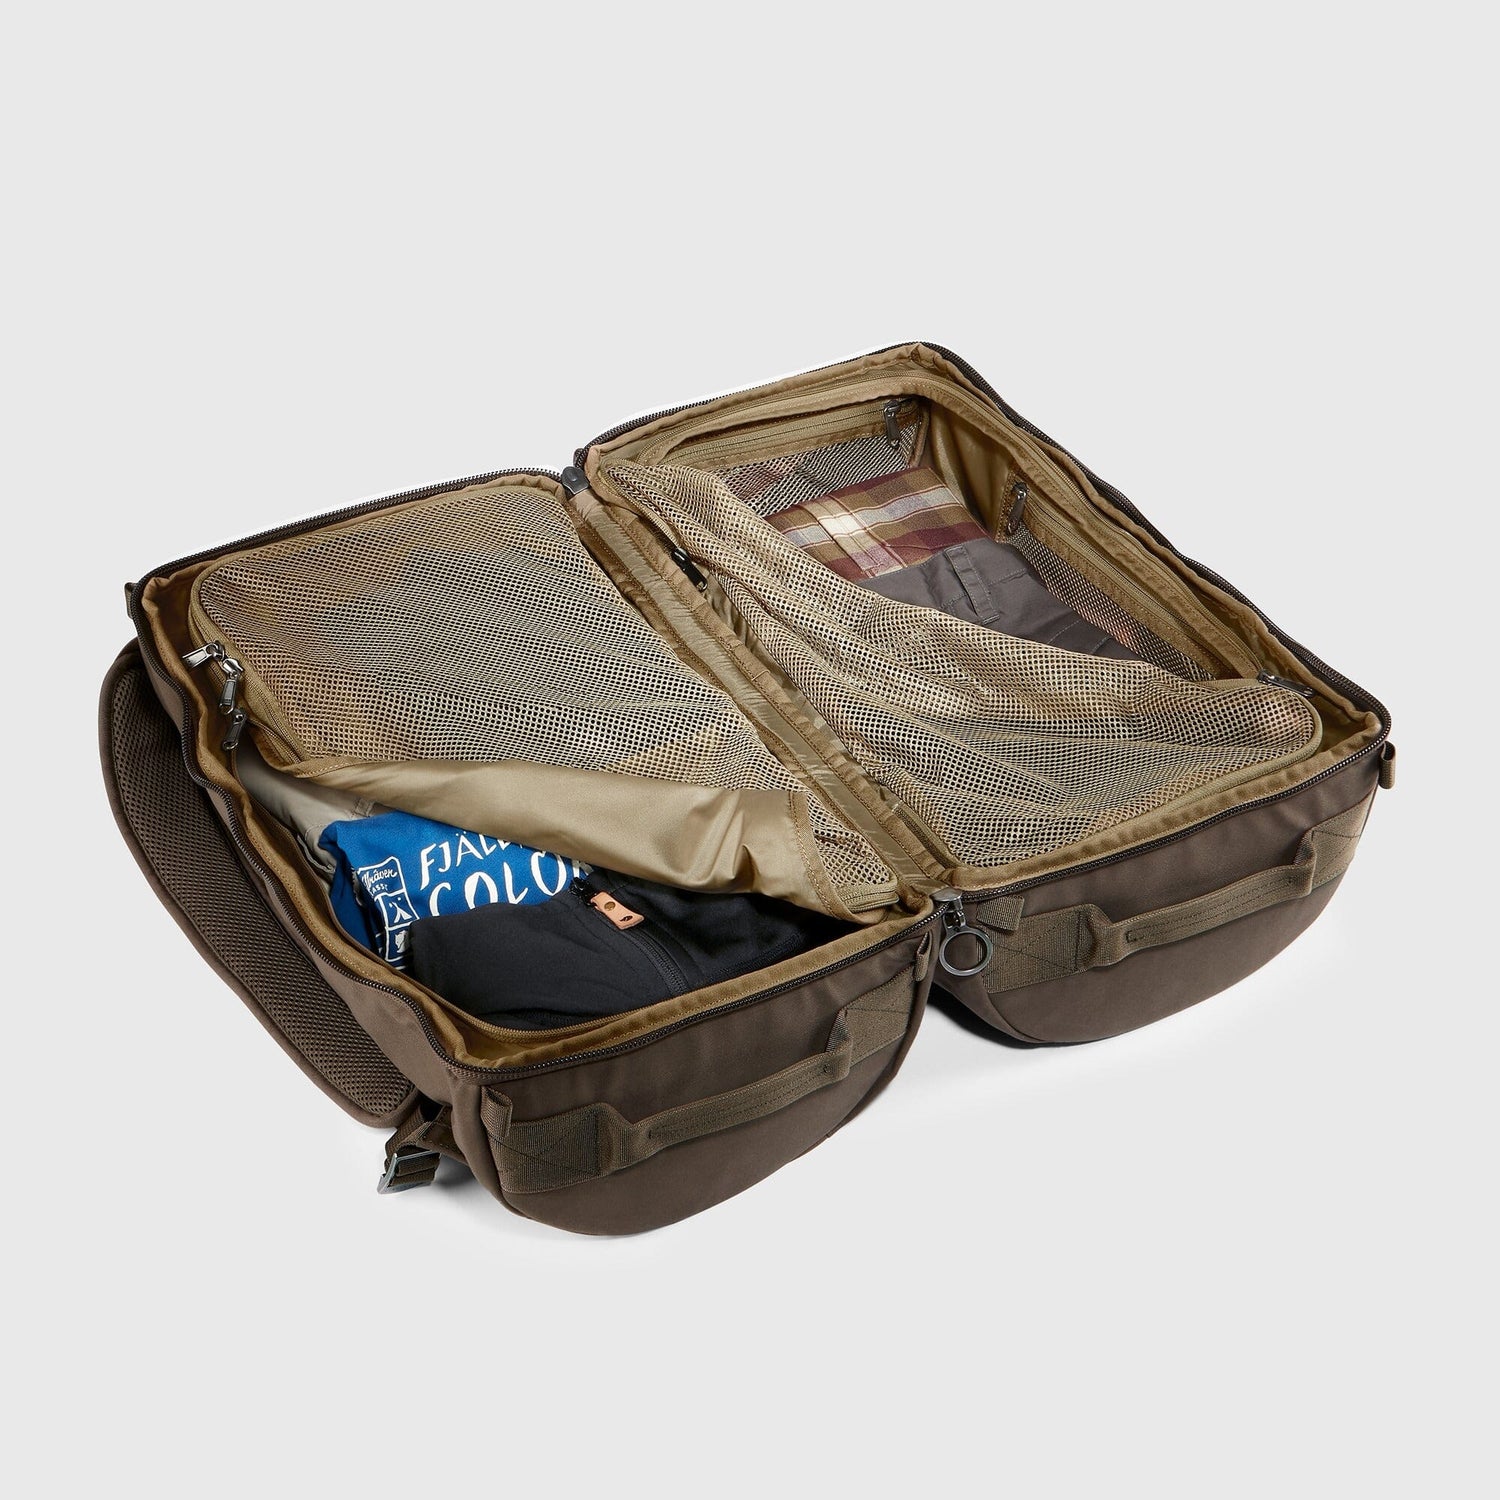 Fjällräven Splitpack Backpack 35l - Recycled Polyester & Organic Cotton Black Bags